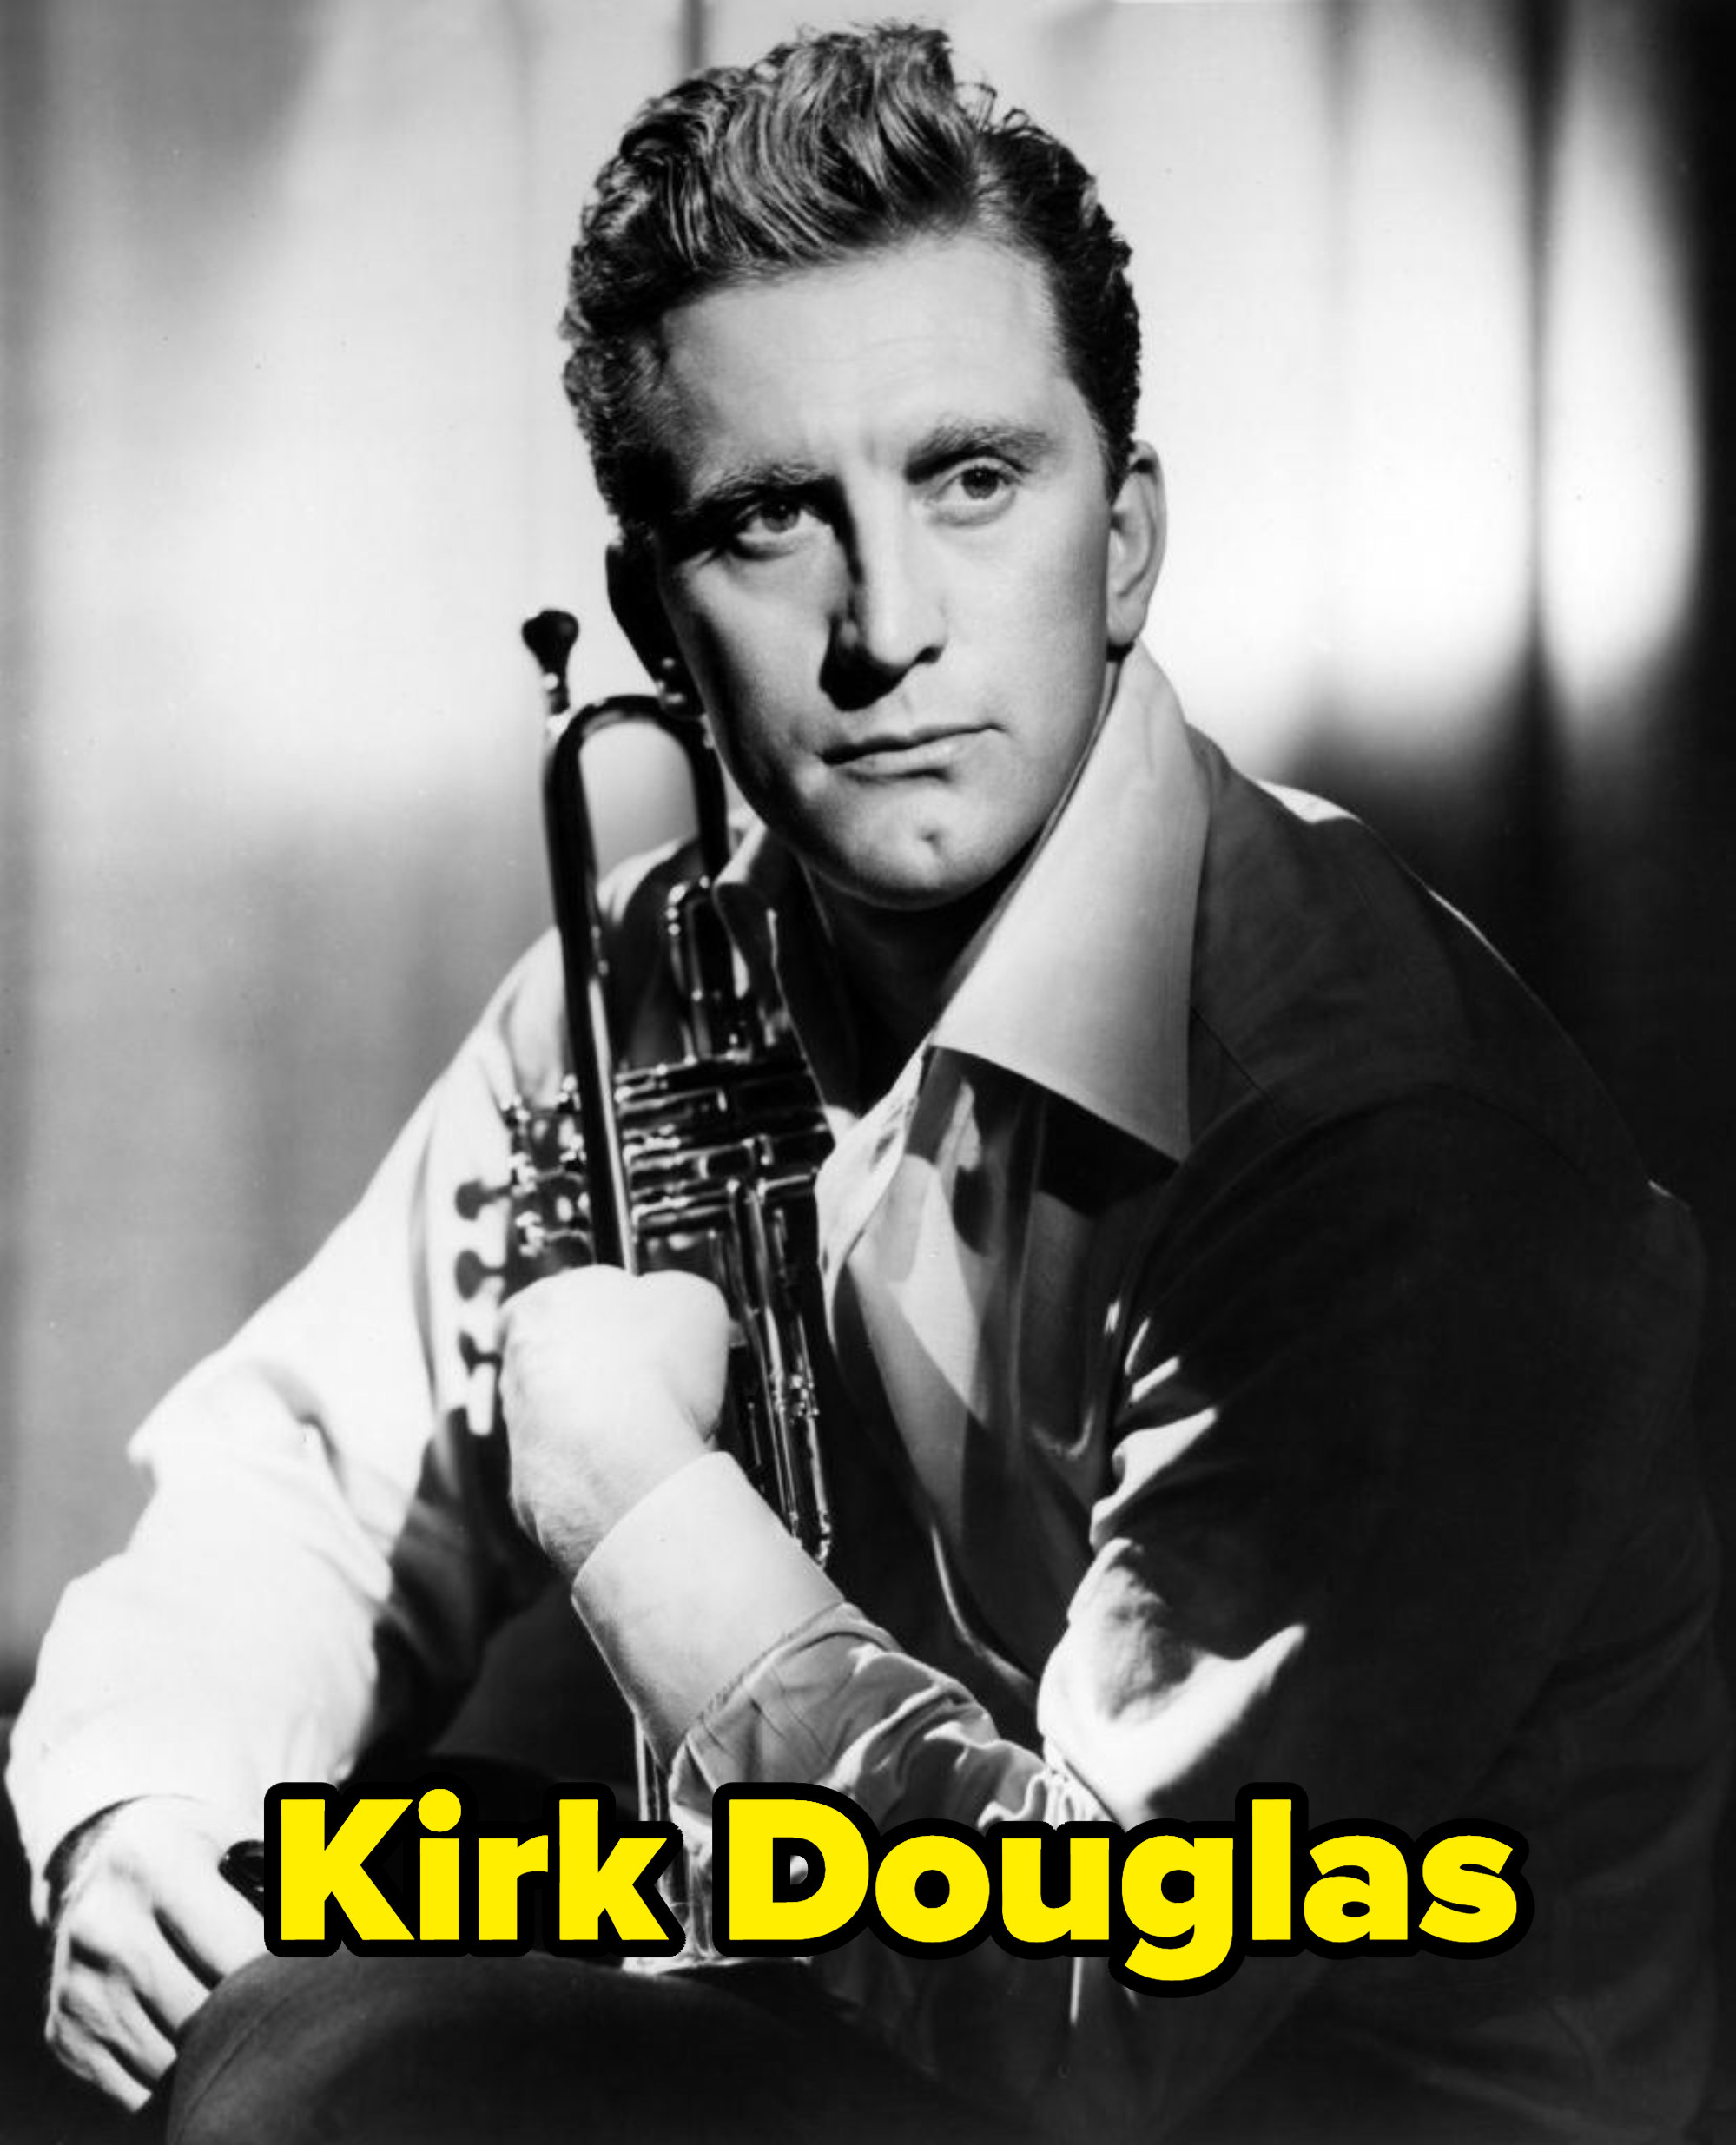 Kirk Douglas holding a trumpet